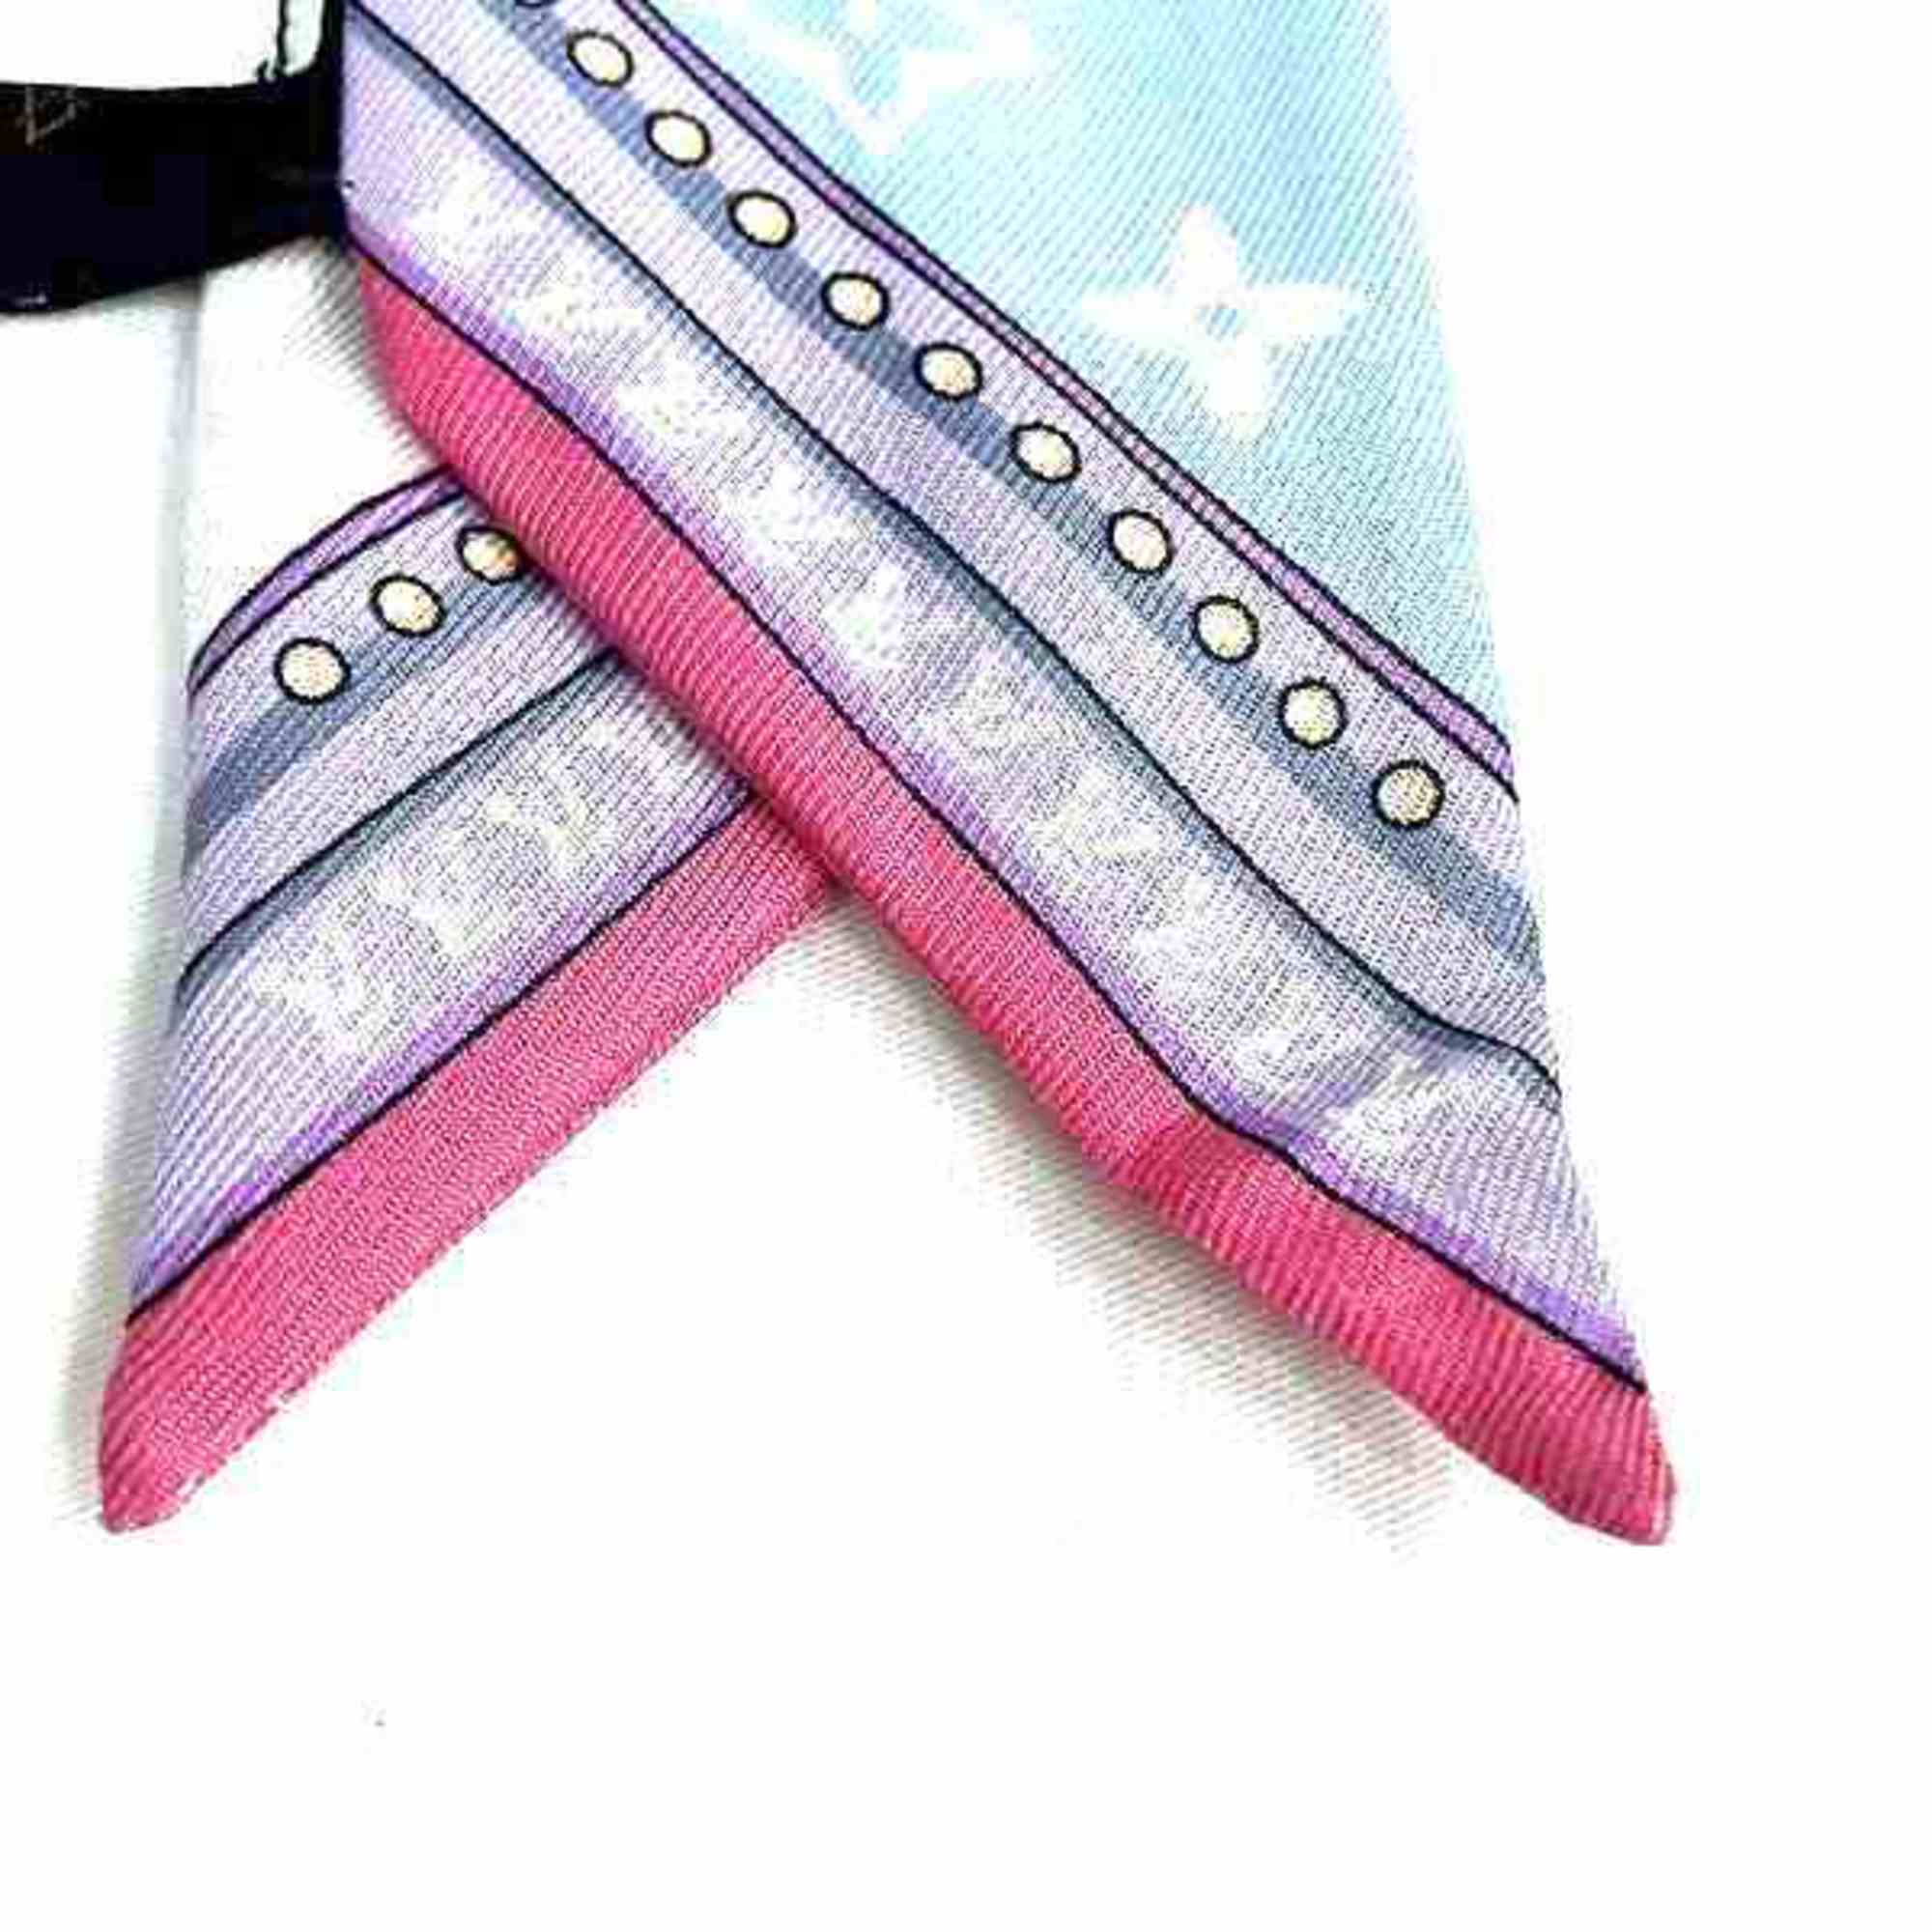 Louis Vuitton Bandeau BB Ultimate Silk Bandana Muffler/Scarf M76677 Women's Accessories